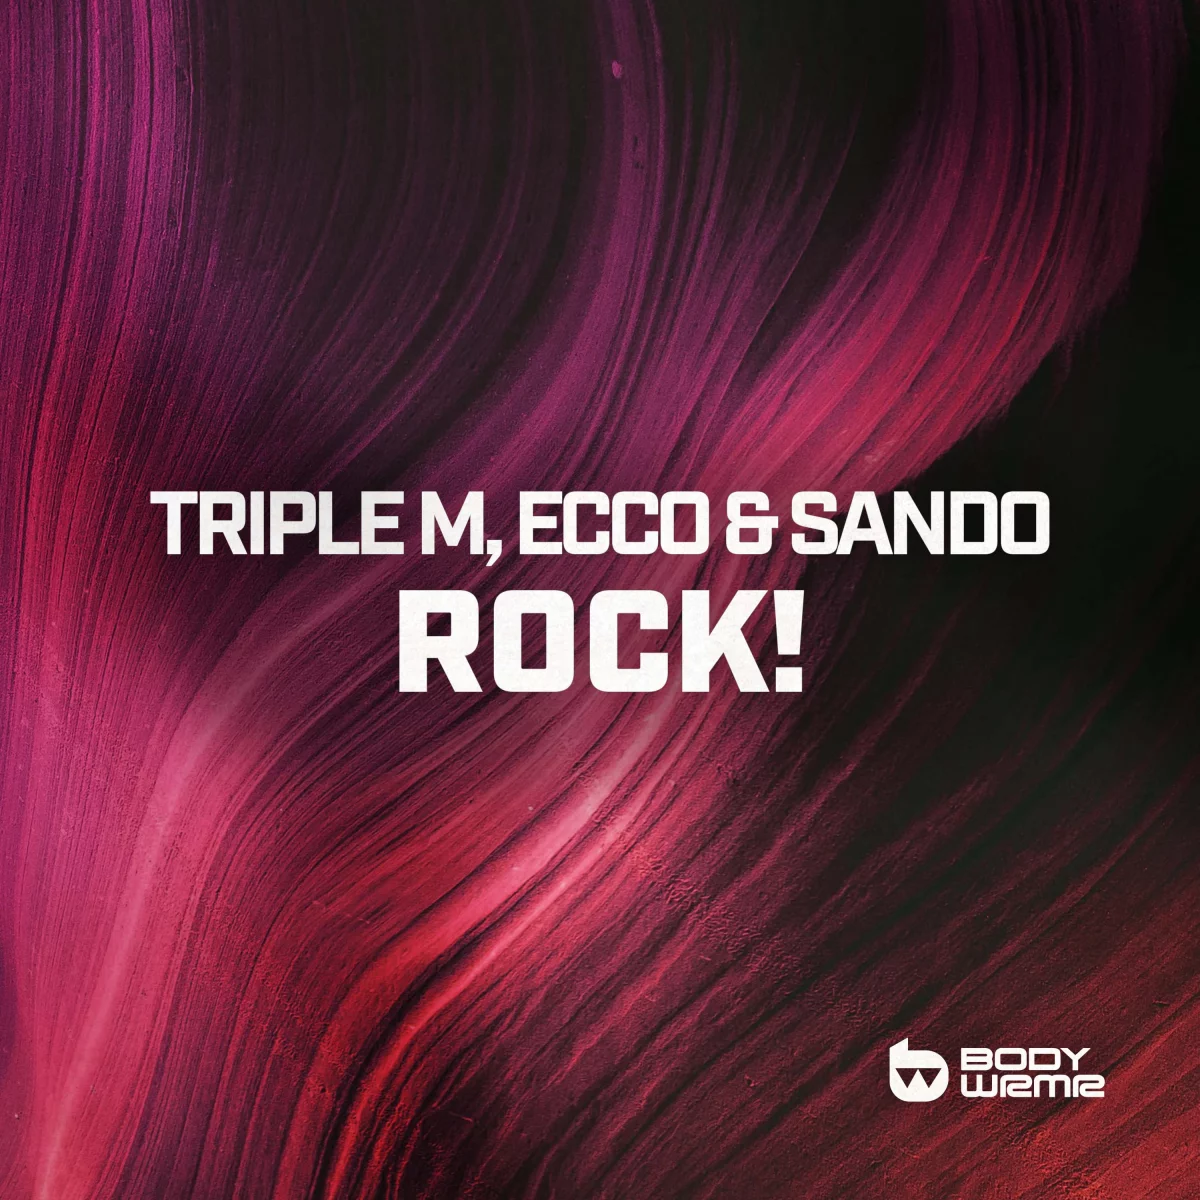 ROCK! - Triple M⁠, Ecco & Sando⁠ 